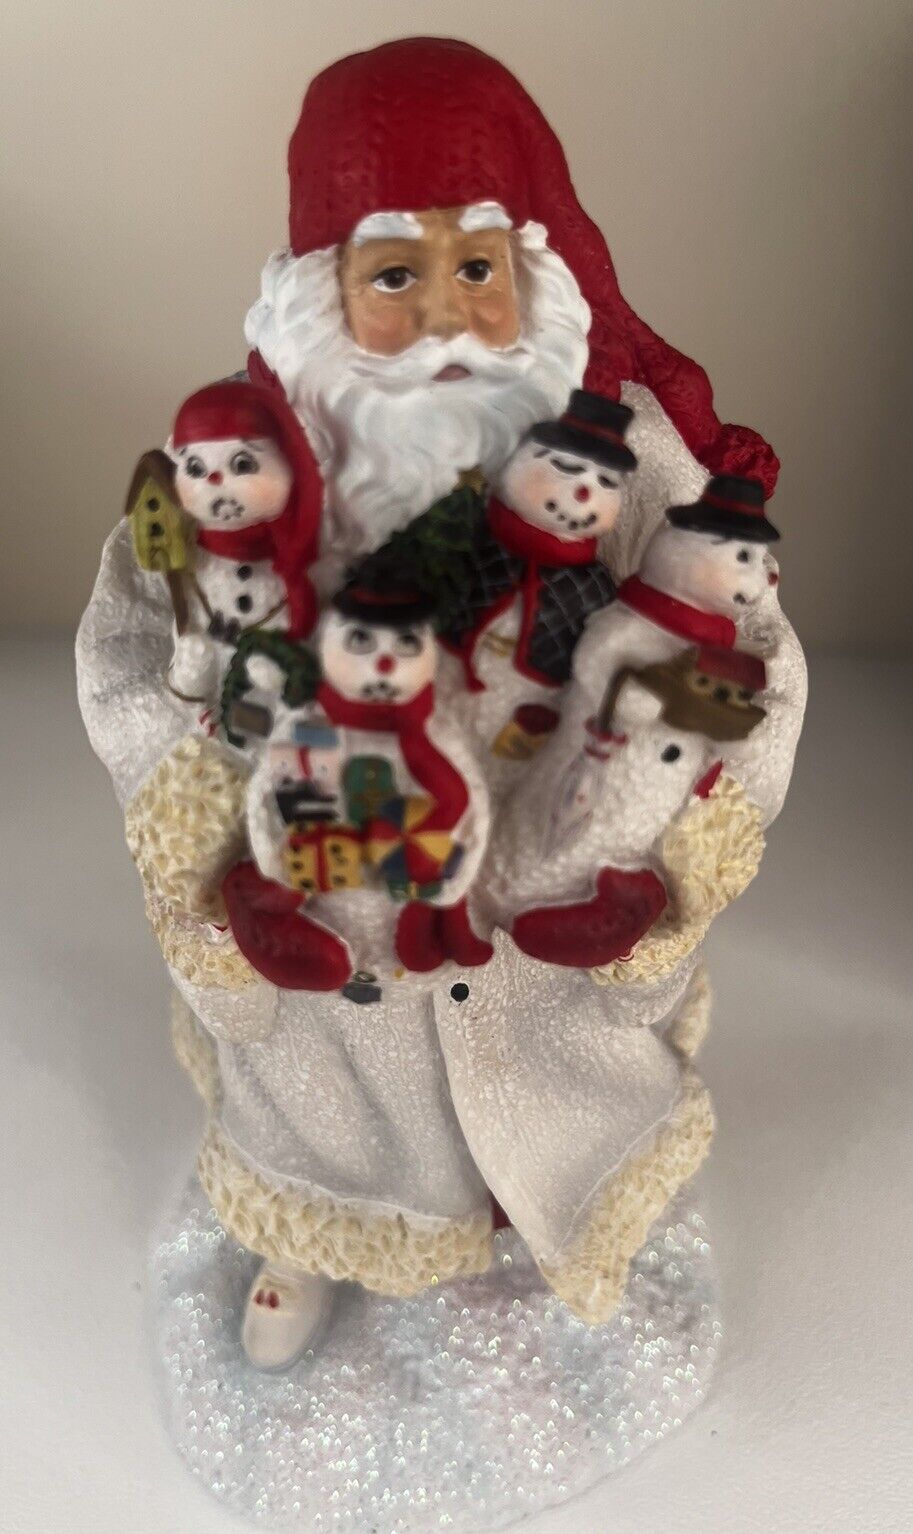 2008 Pipka Snowman Santa # 1031 Collectors Certificate of Authenticity Borsheims